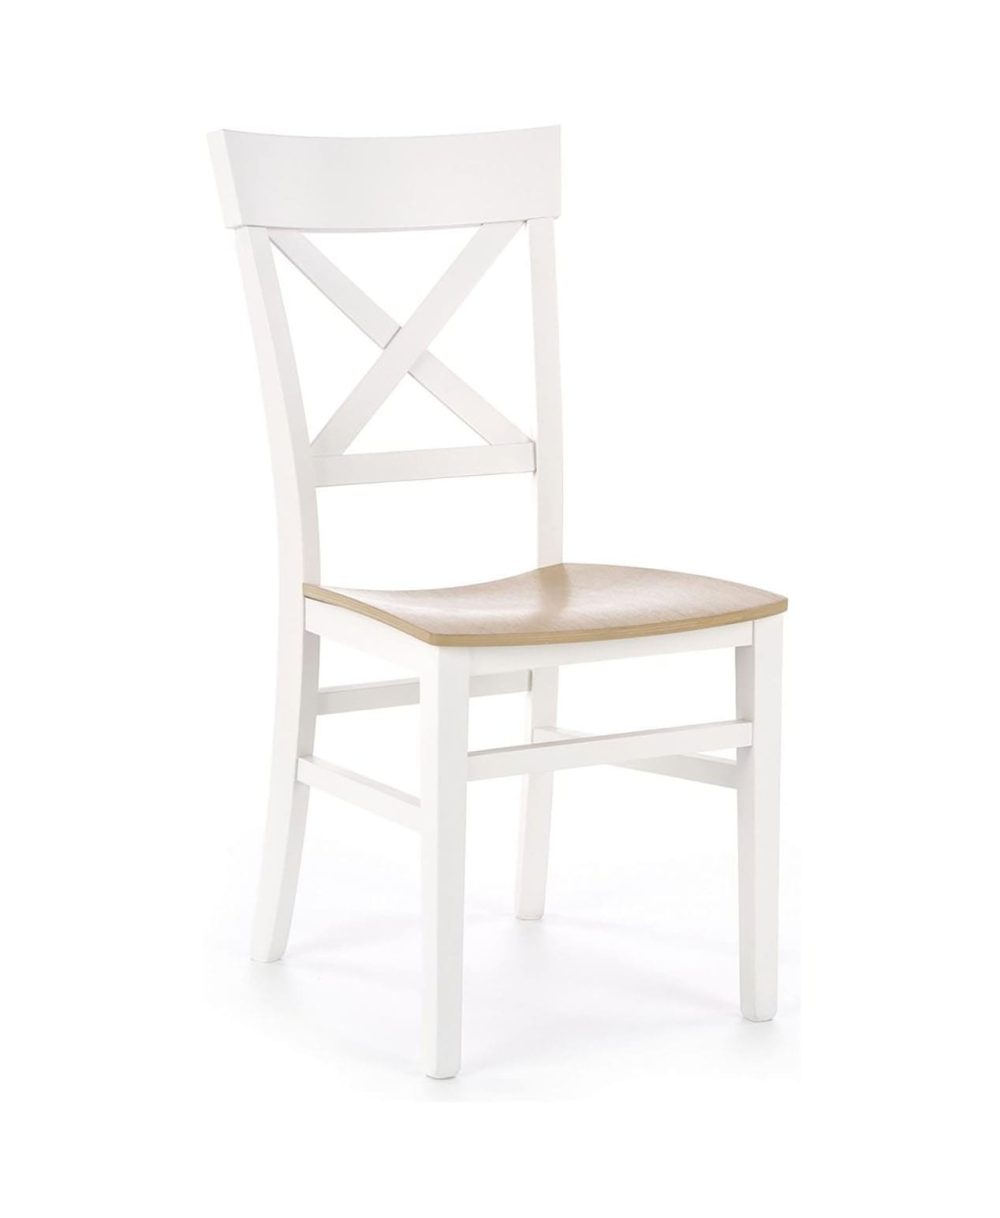 peter-chair-white-profile.jpg